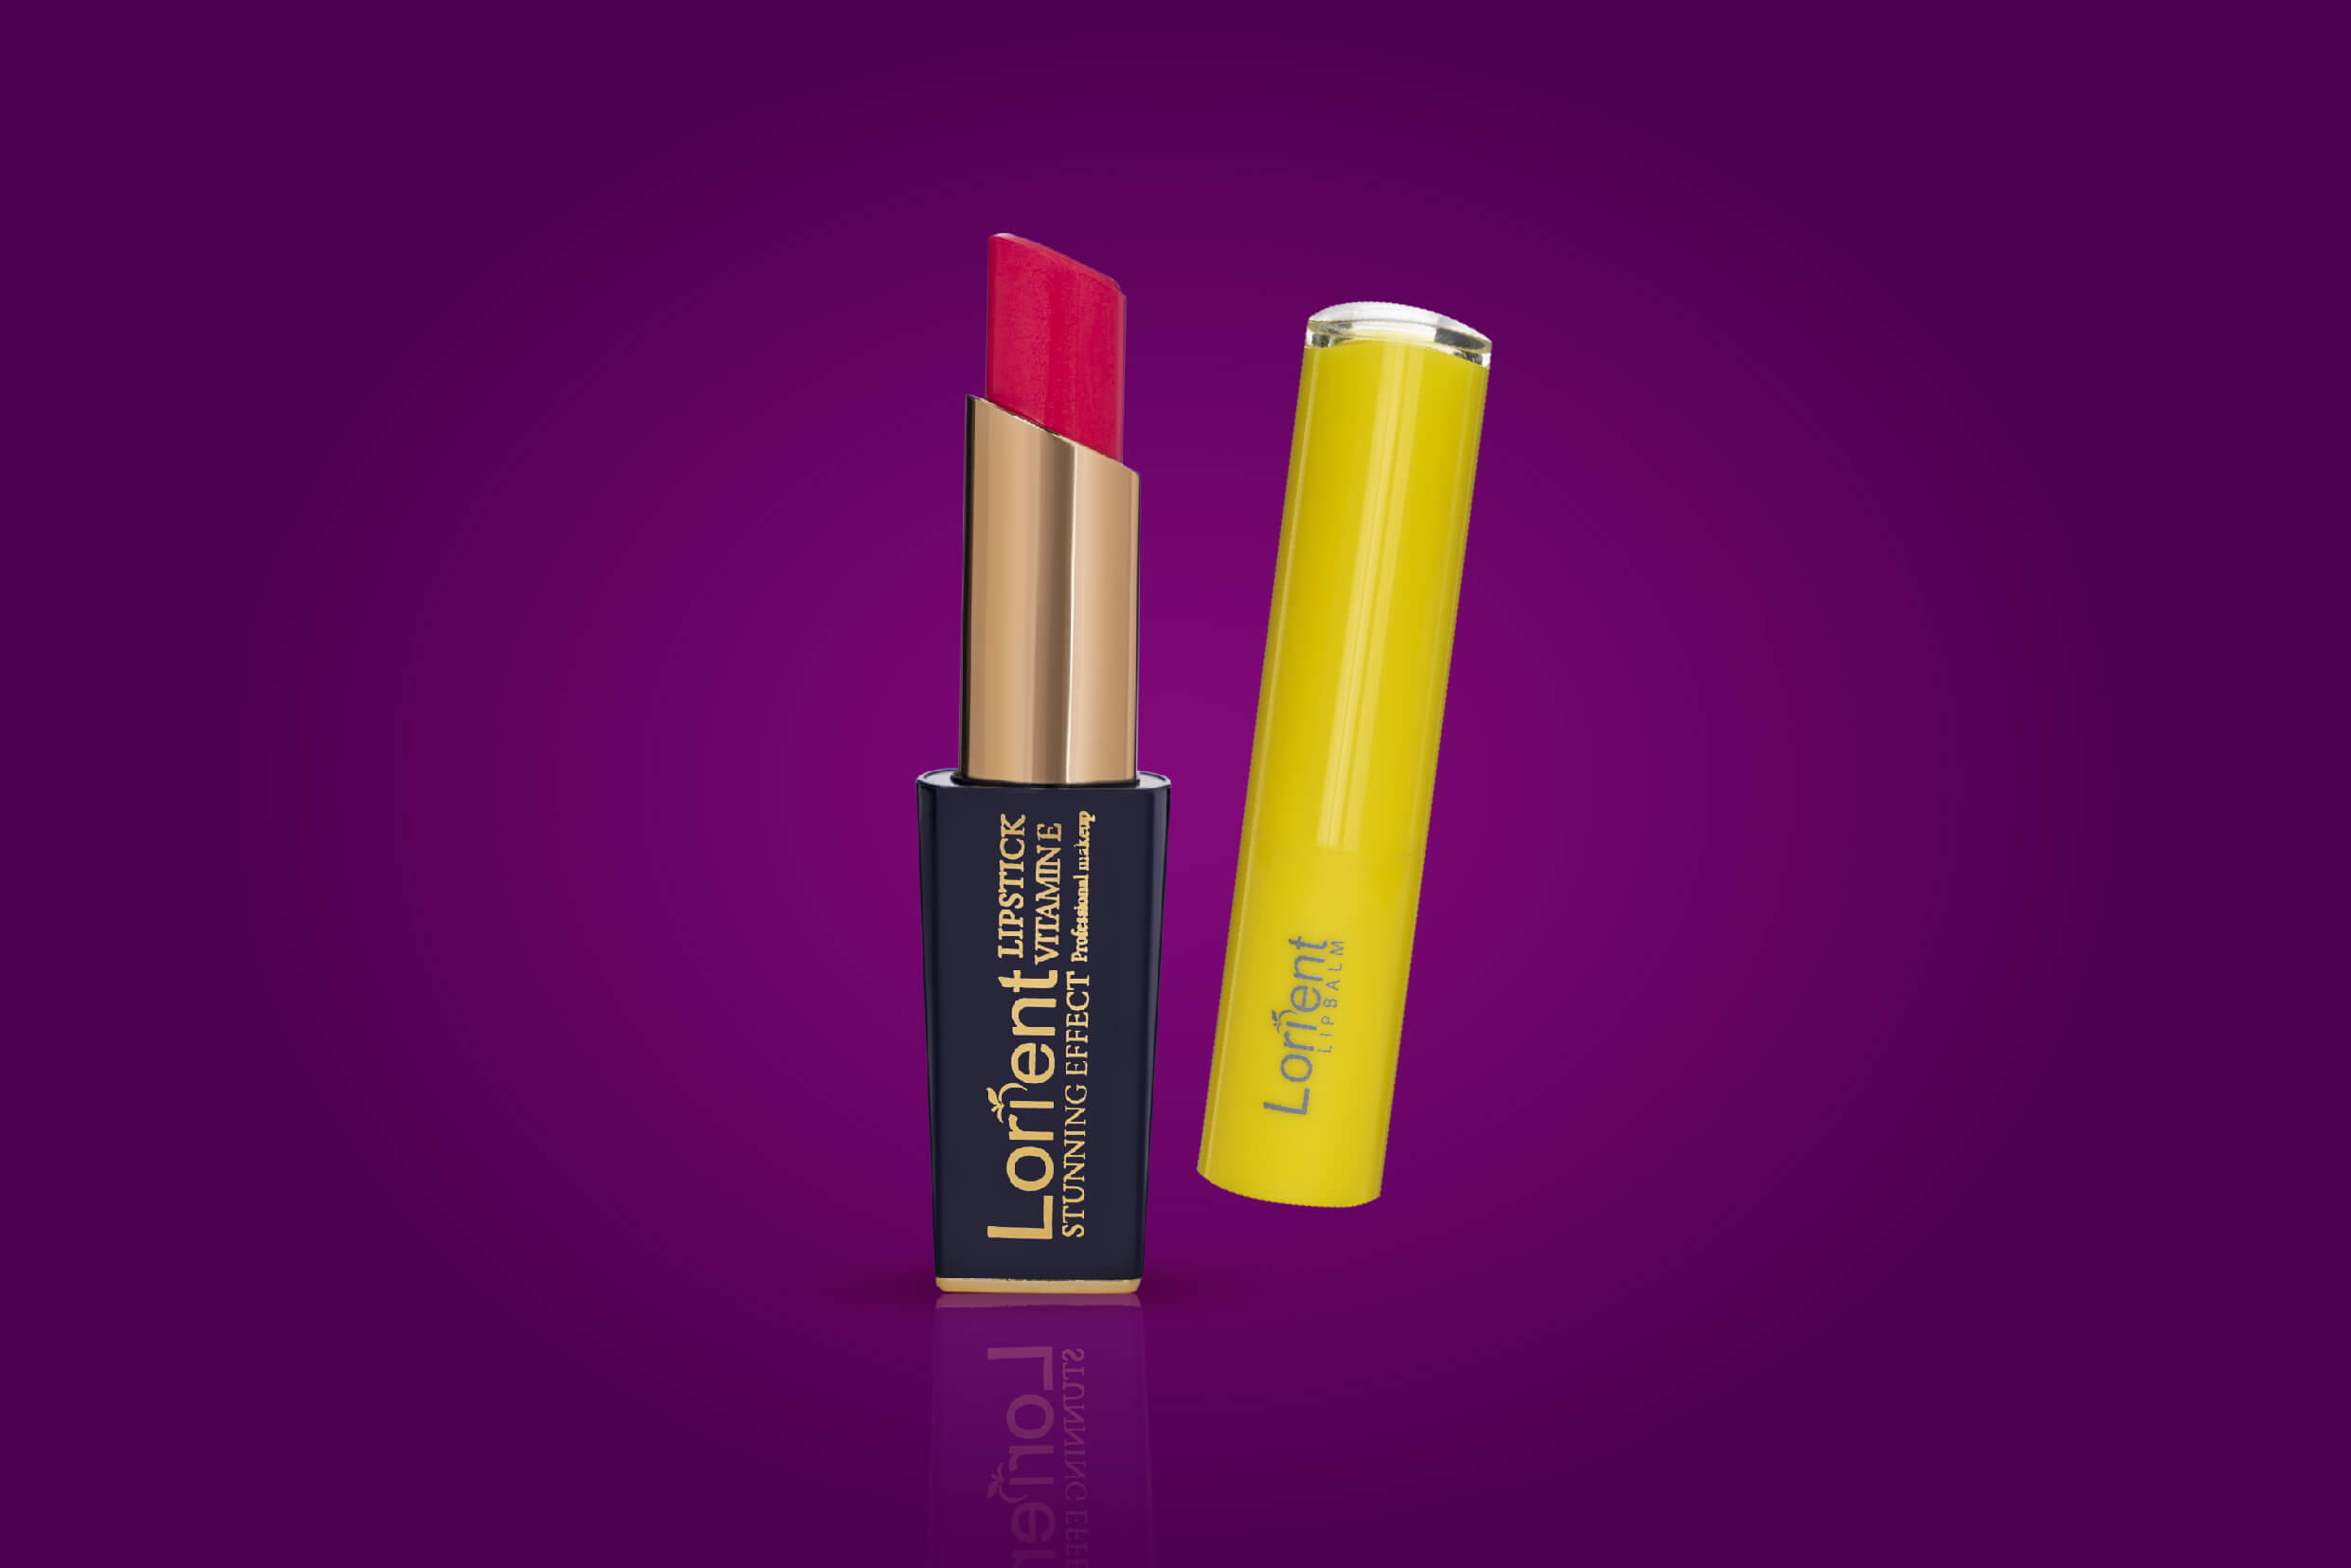 Lorient lip makeup